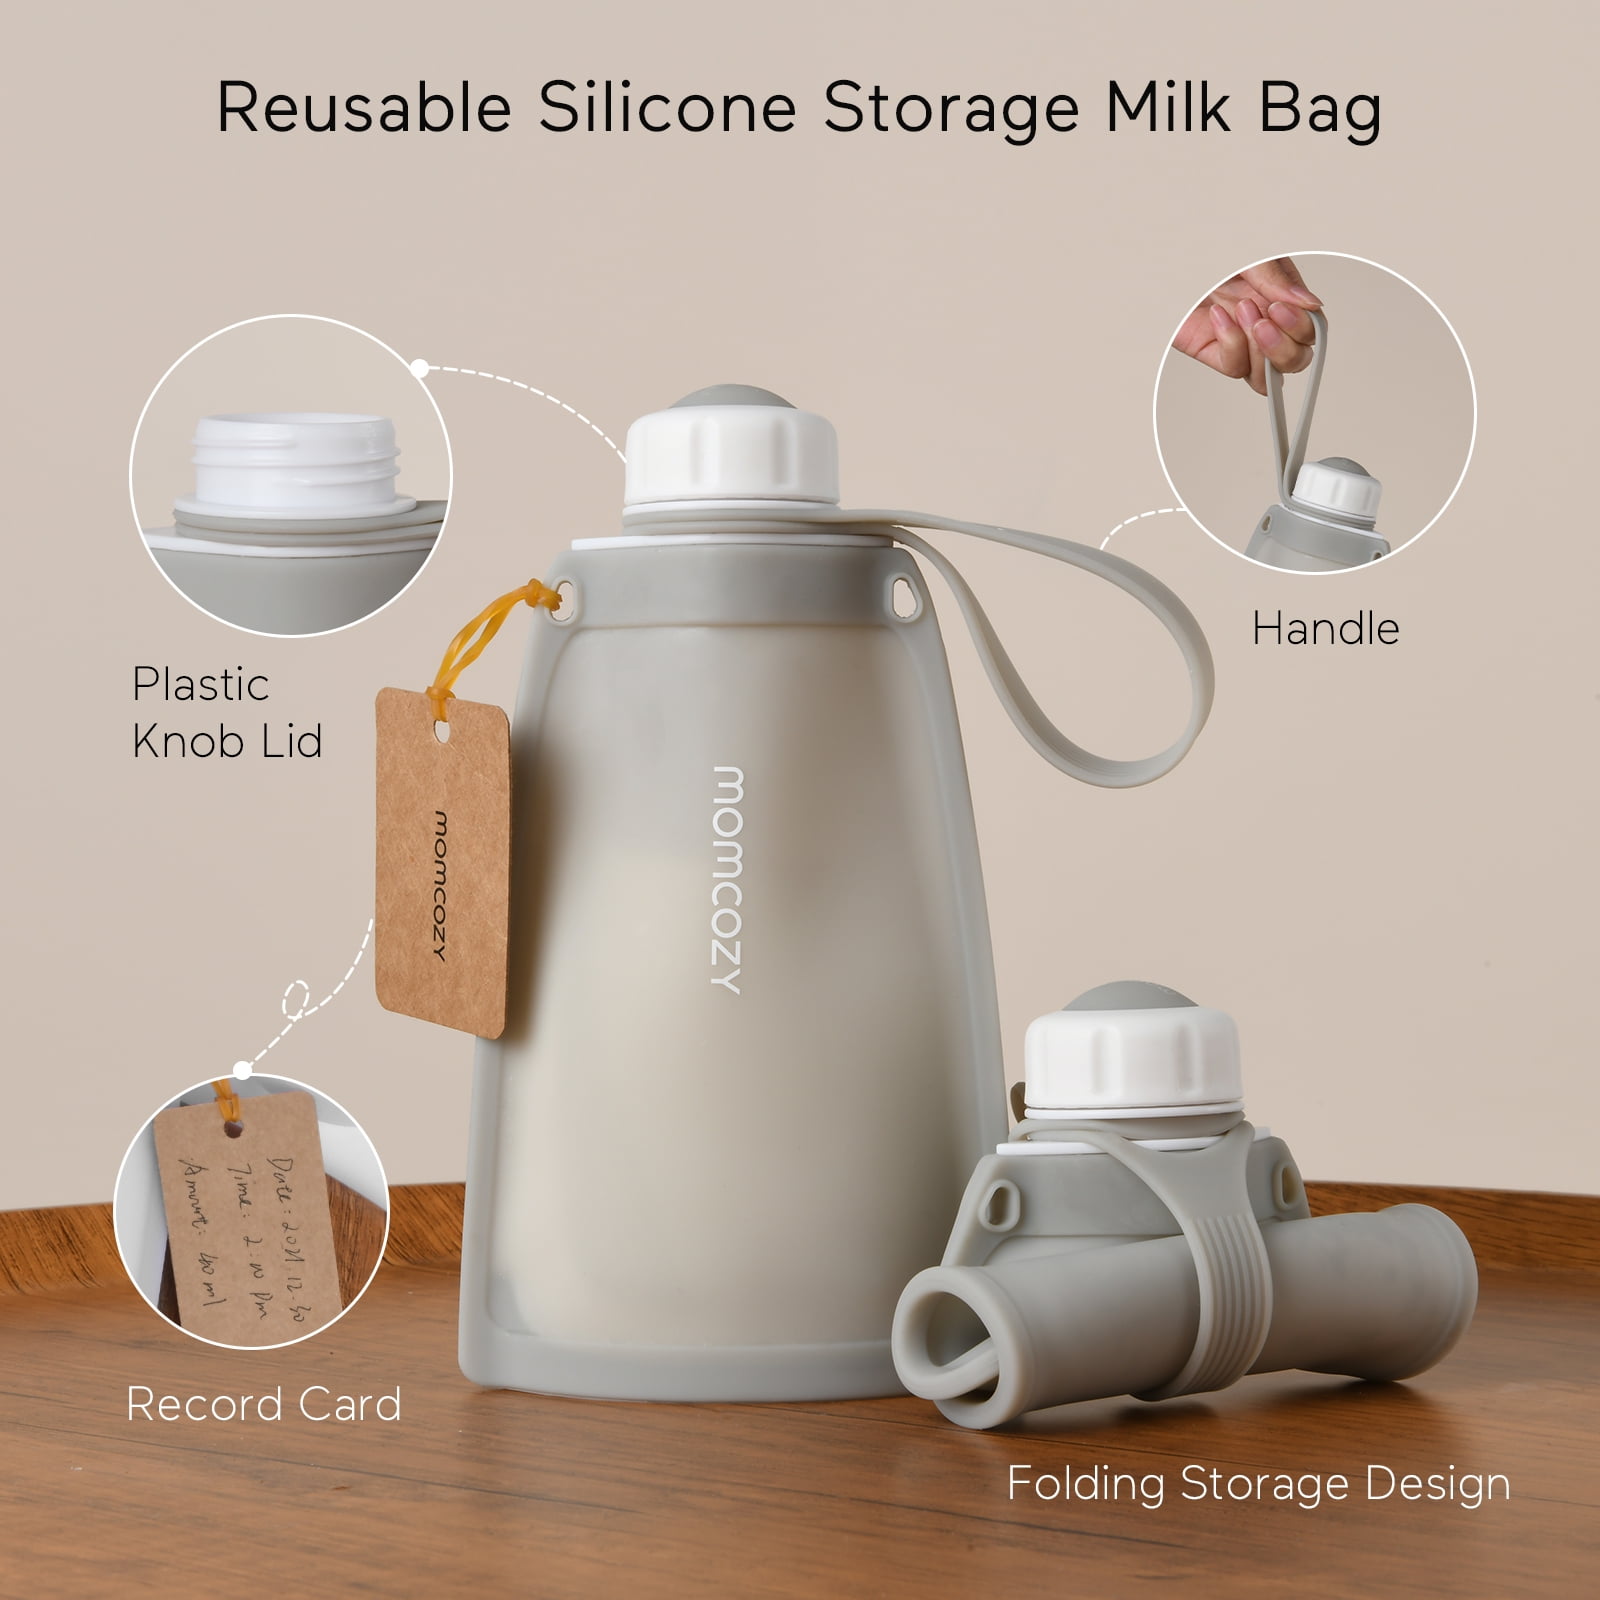 Momcozy Breastmilk Storage Bags 120 Ct, Temp-Sensing Discoloration  Breastfeeding Storage Bag 6oz/180ml 